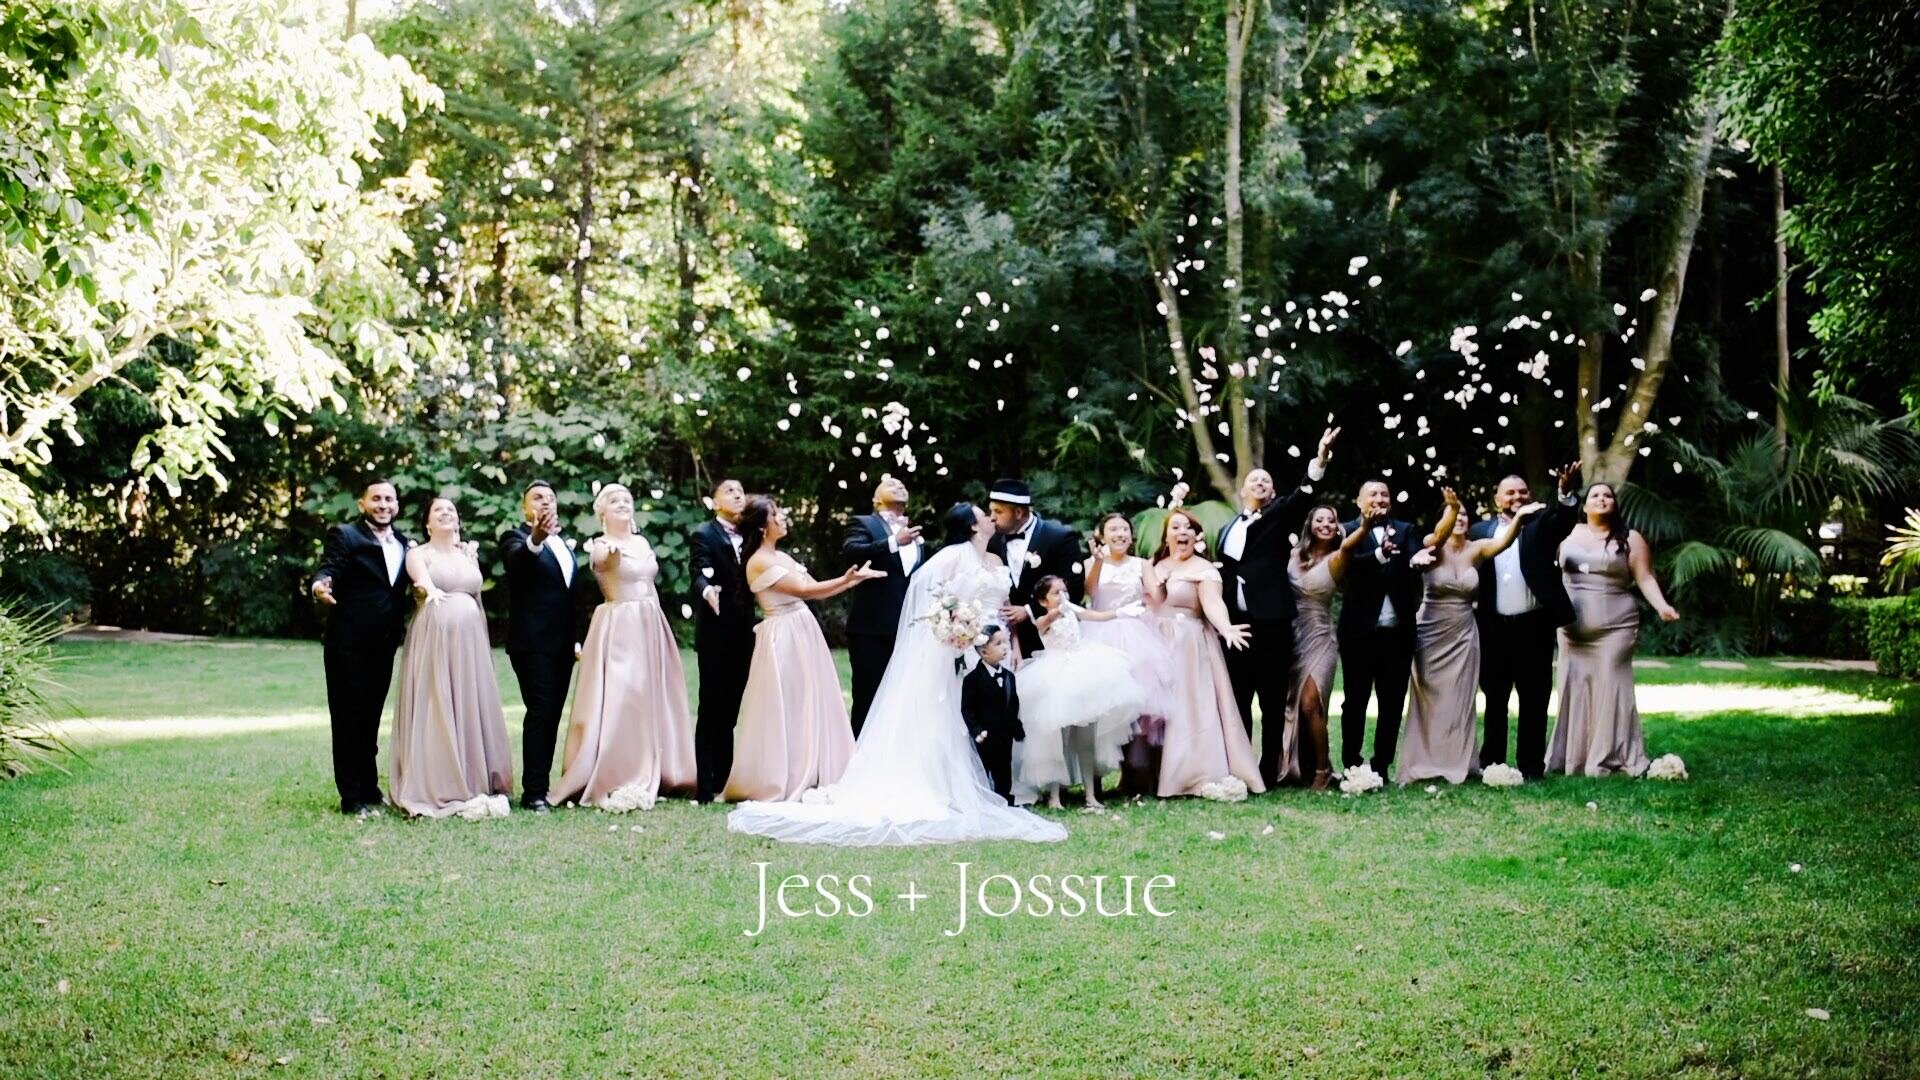 Jess + Jossue Cover Frame.jpg